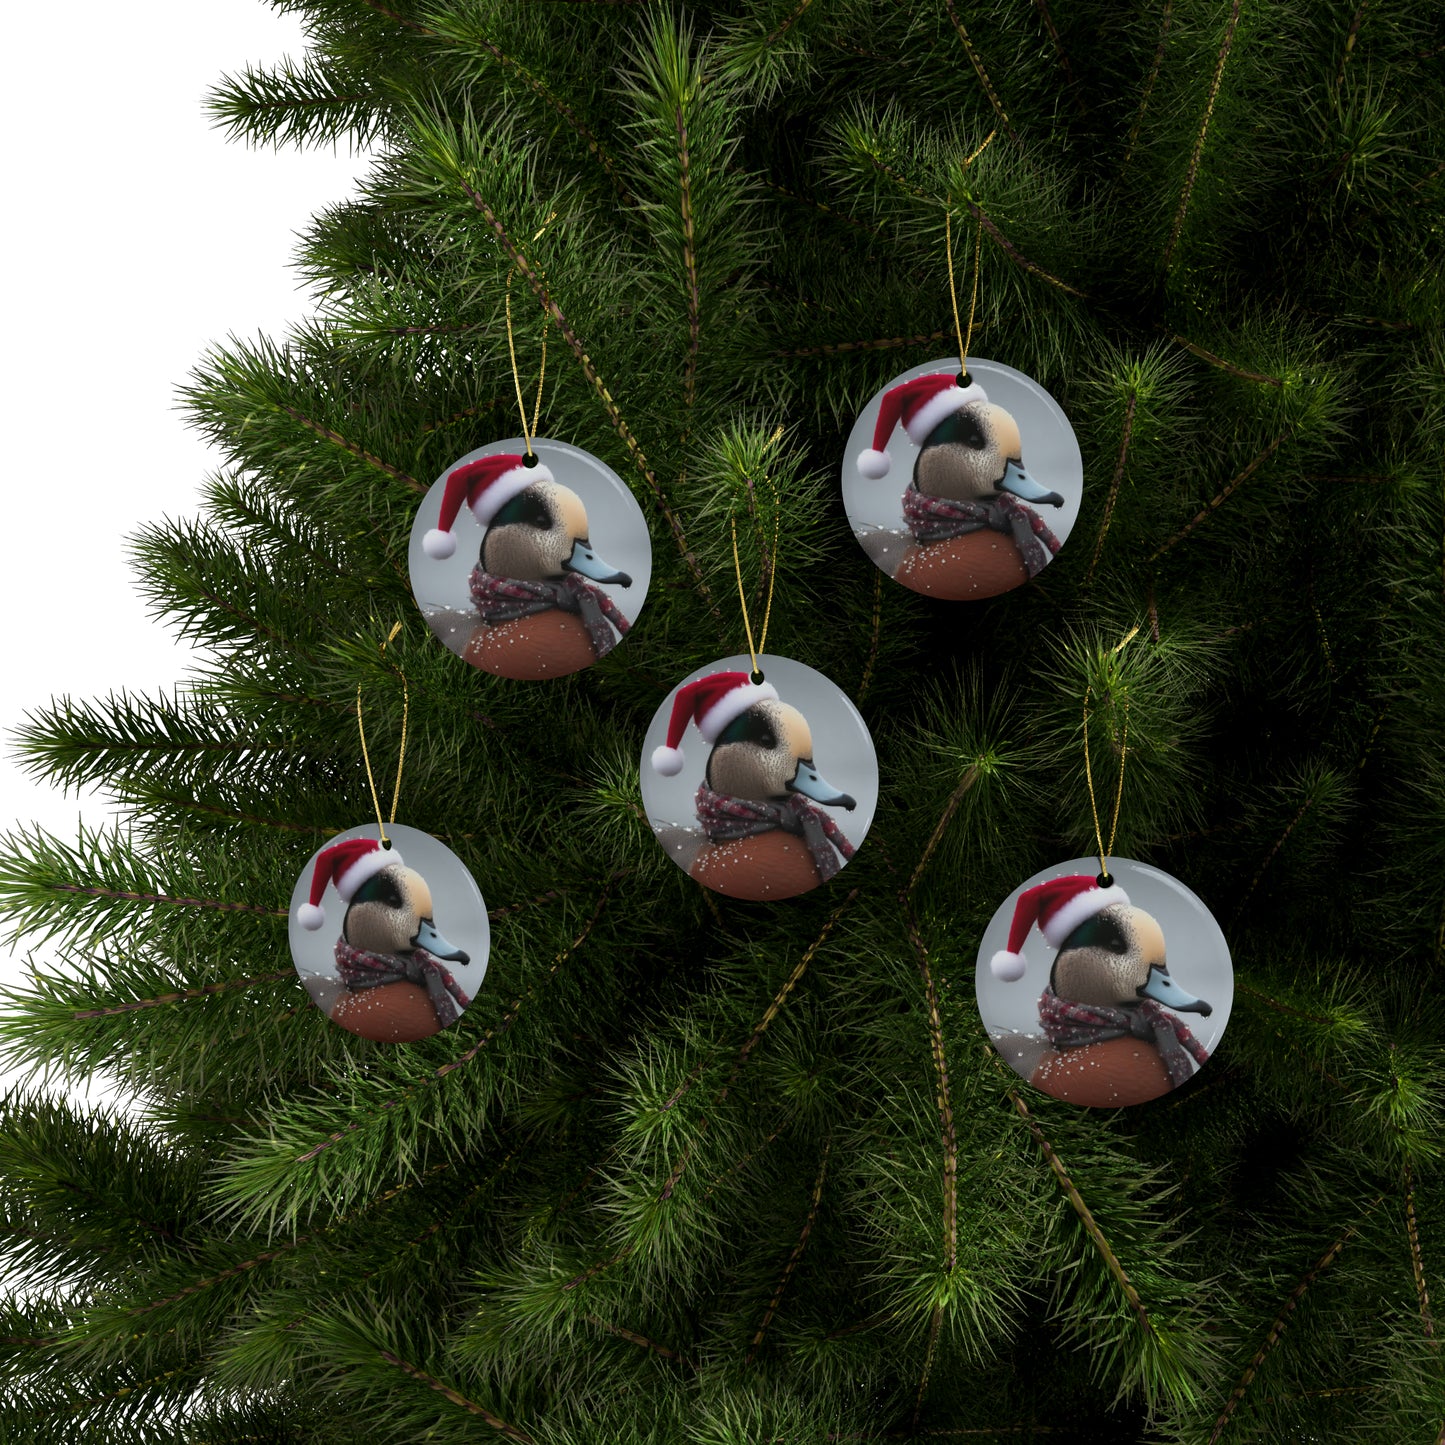 Christmas Wigeon Ornaments